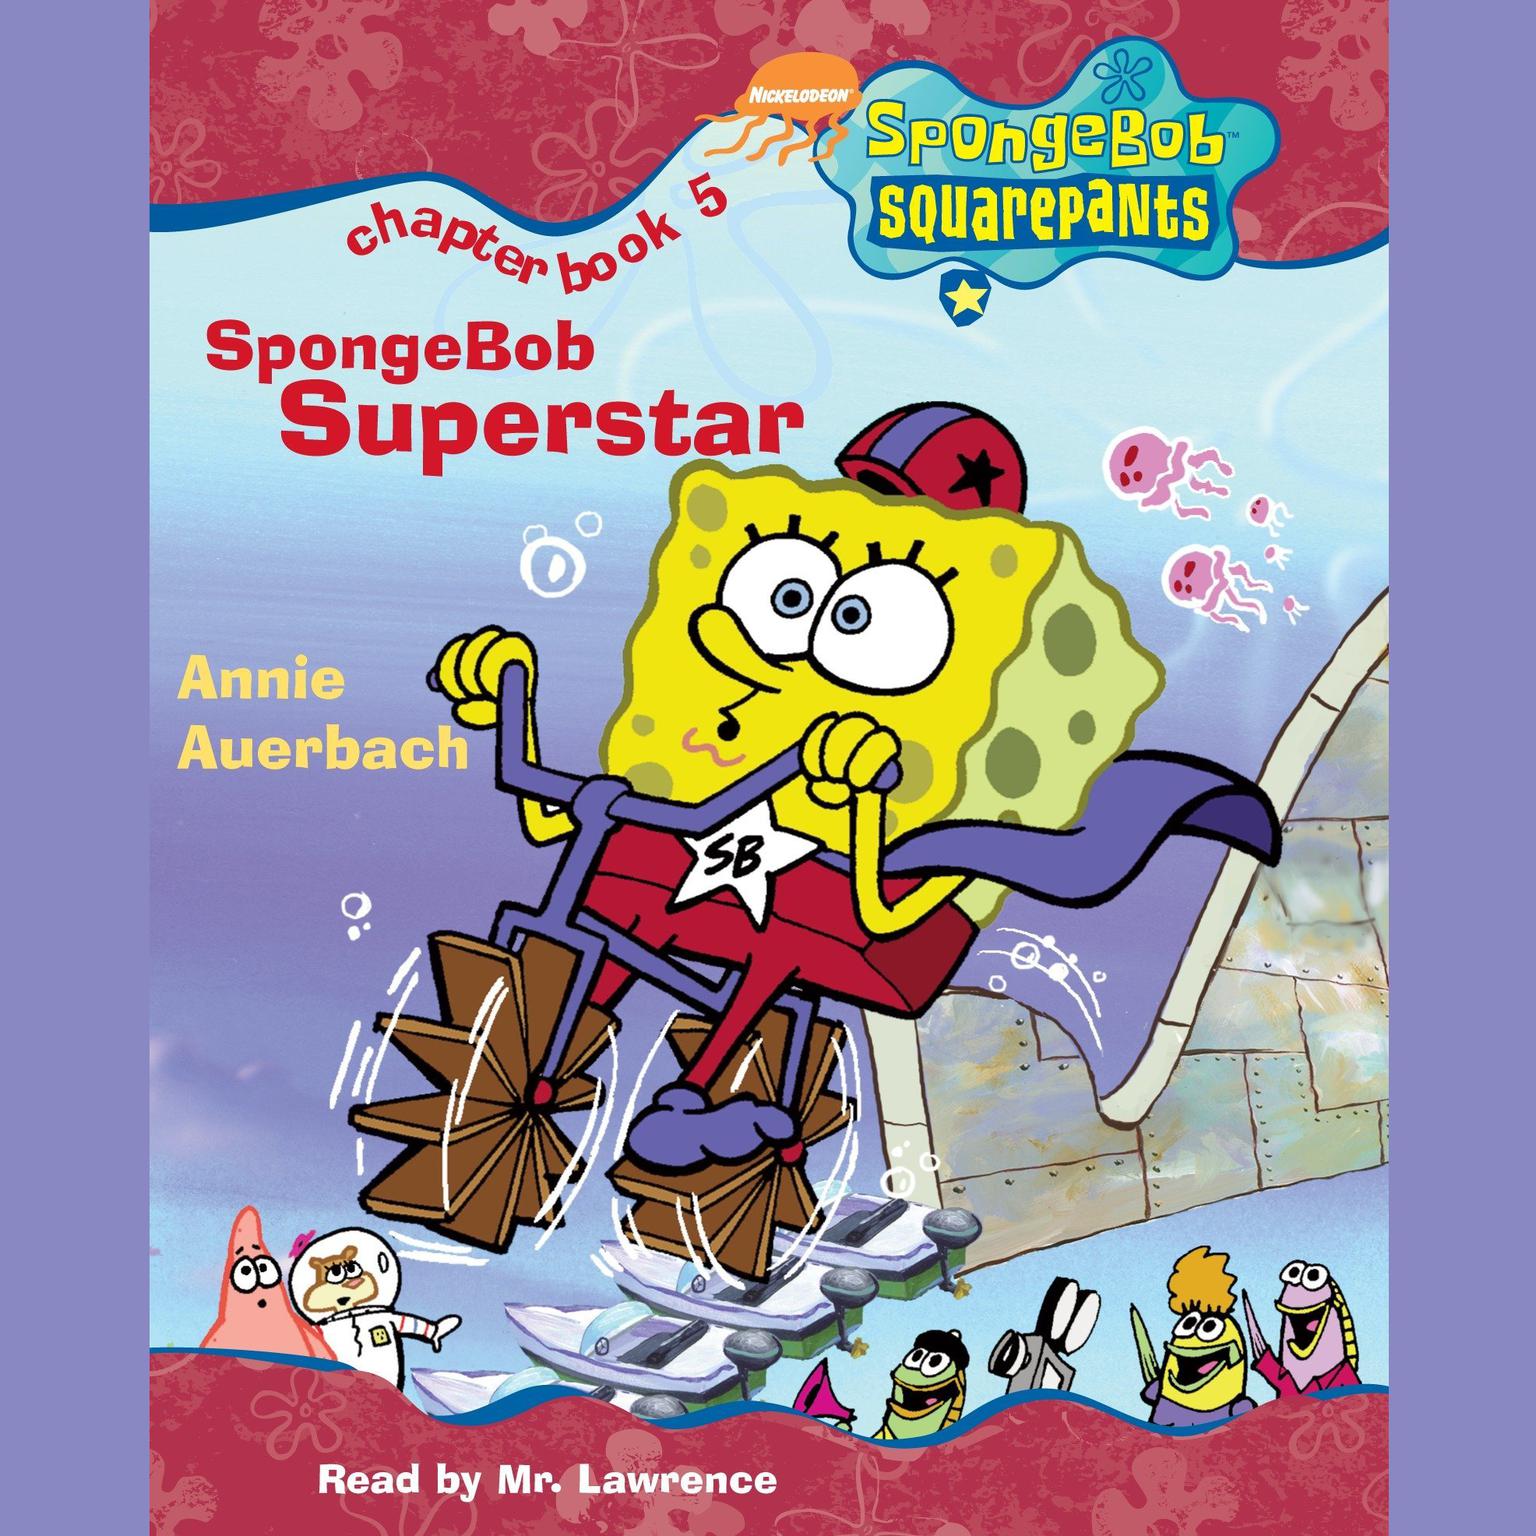 SpongeBob Squarepants #5: SpongeBob Superstar Audiobook, by Annie Auerbach